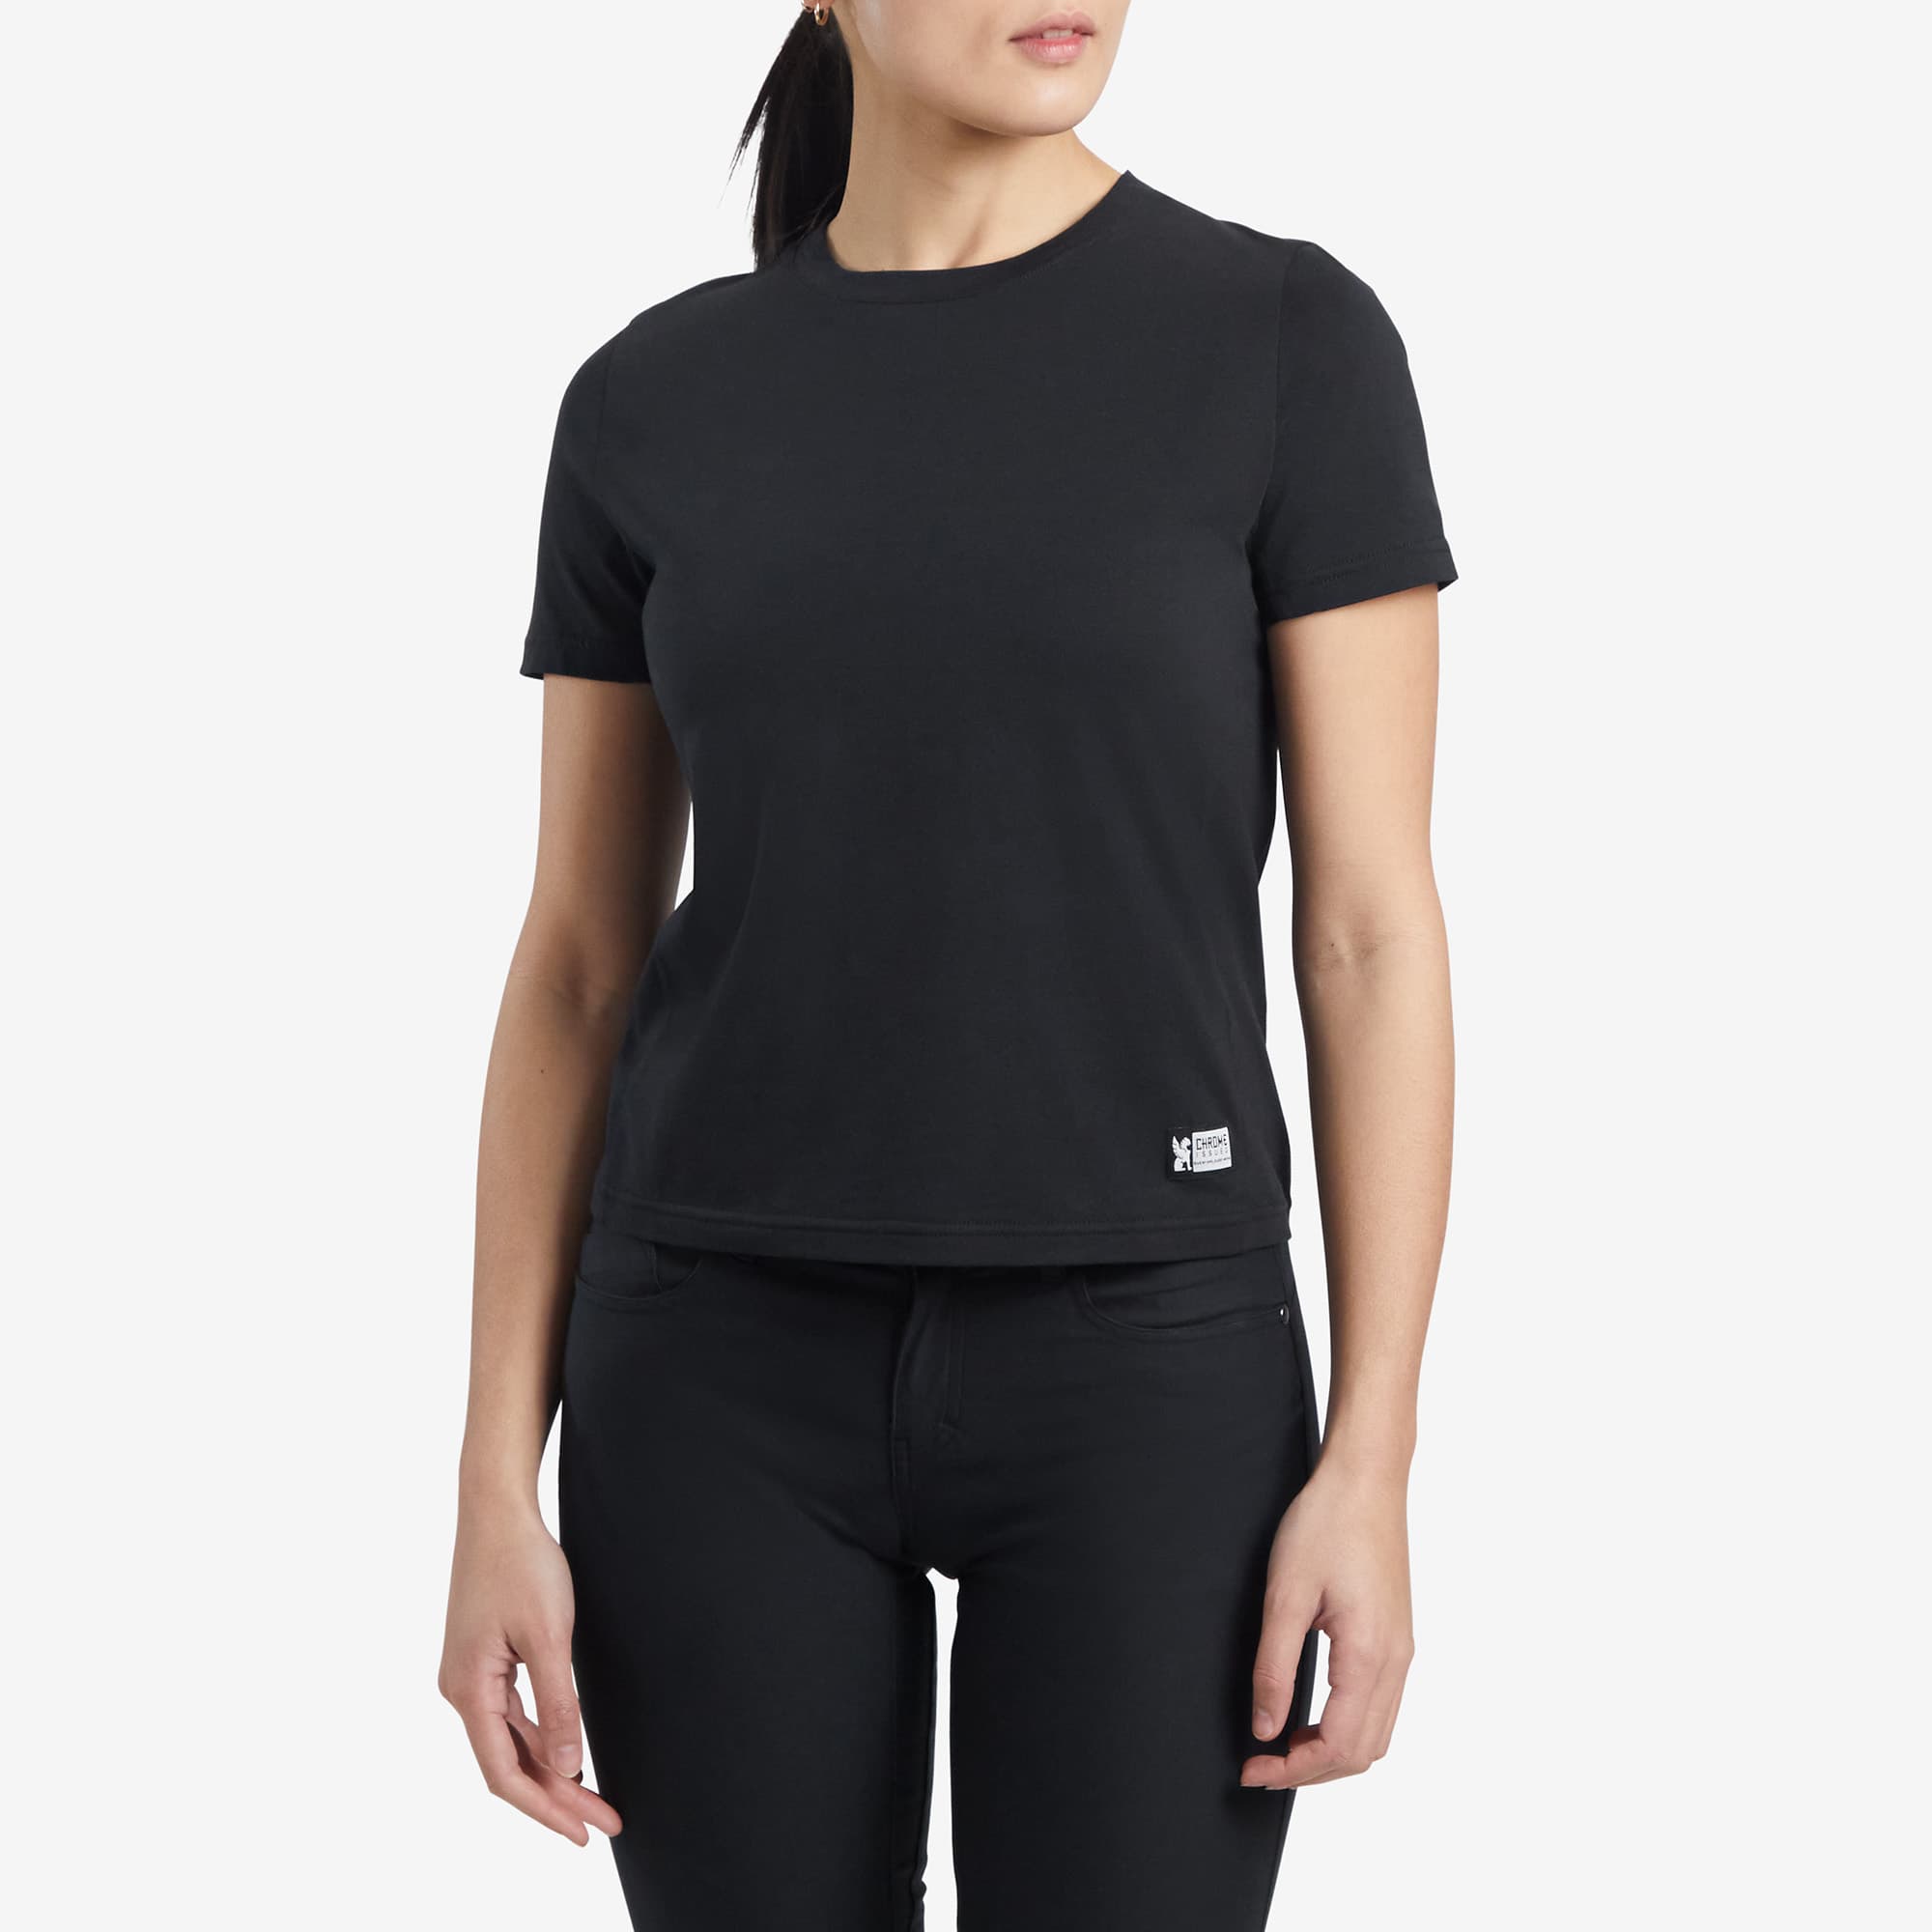 Women's Chrome basic T-Shirt black short sleeve worn by a woman #color_black